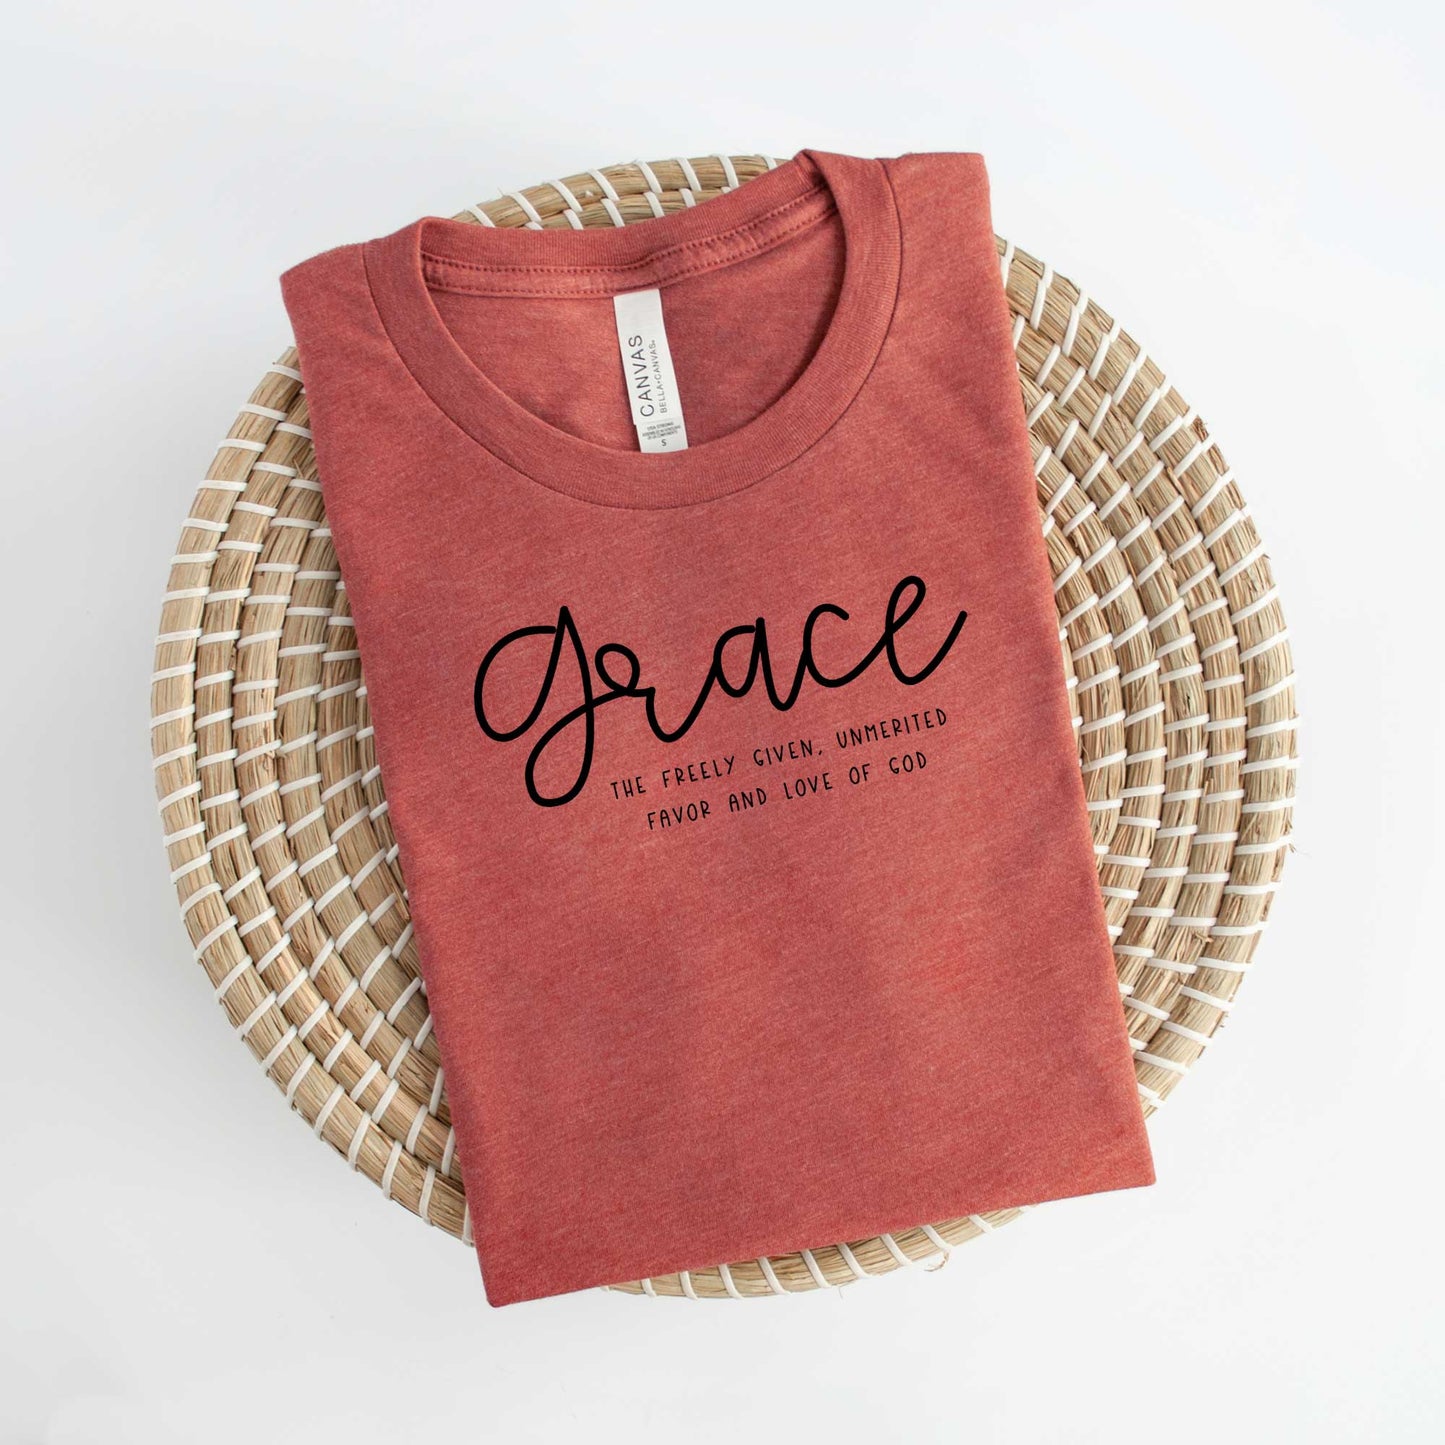 Grace Love Of God | Short Sleeve Crew Neck